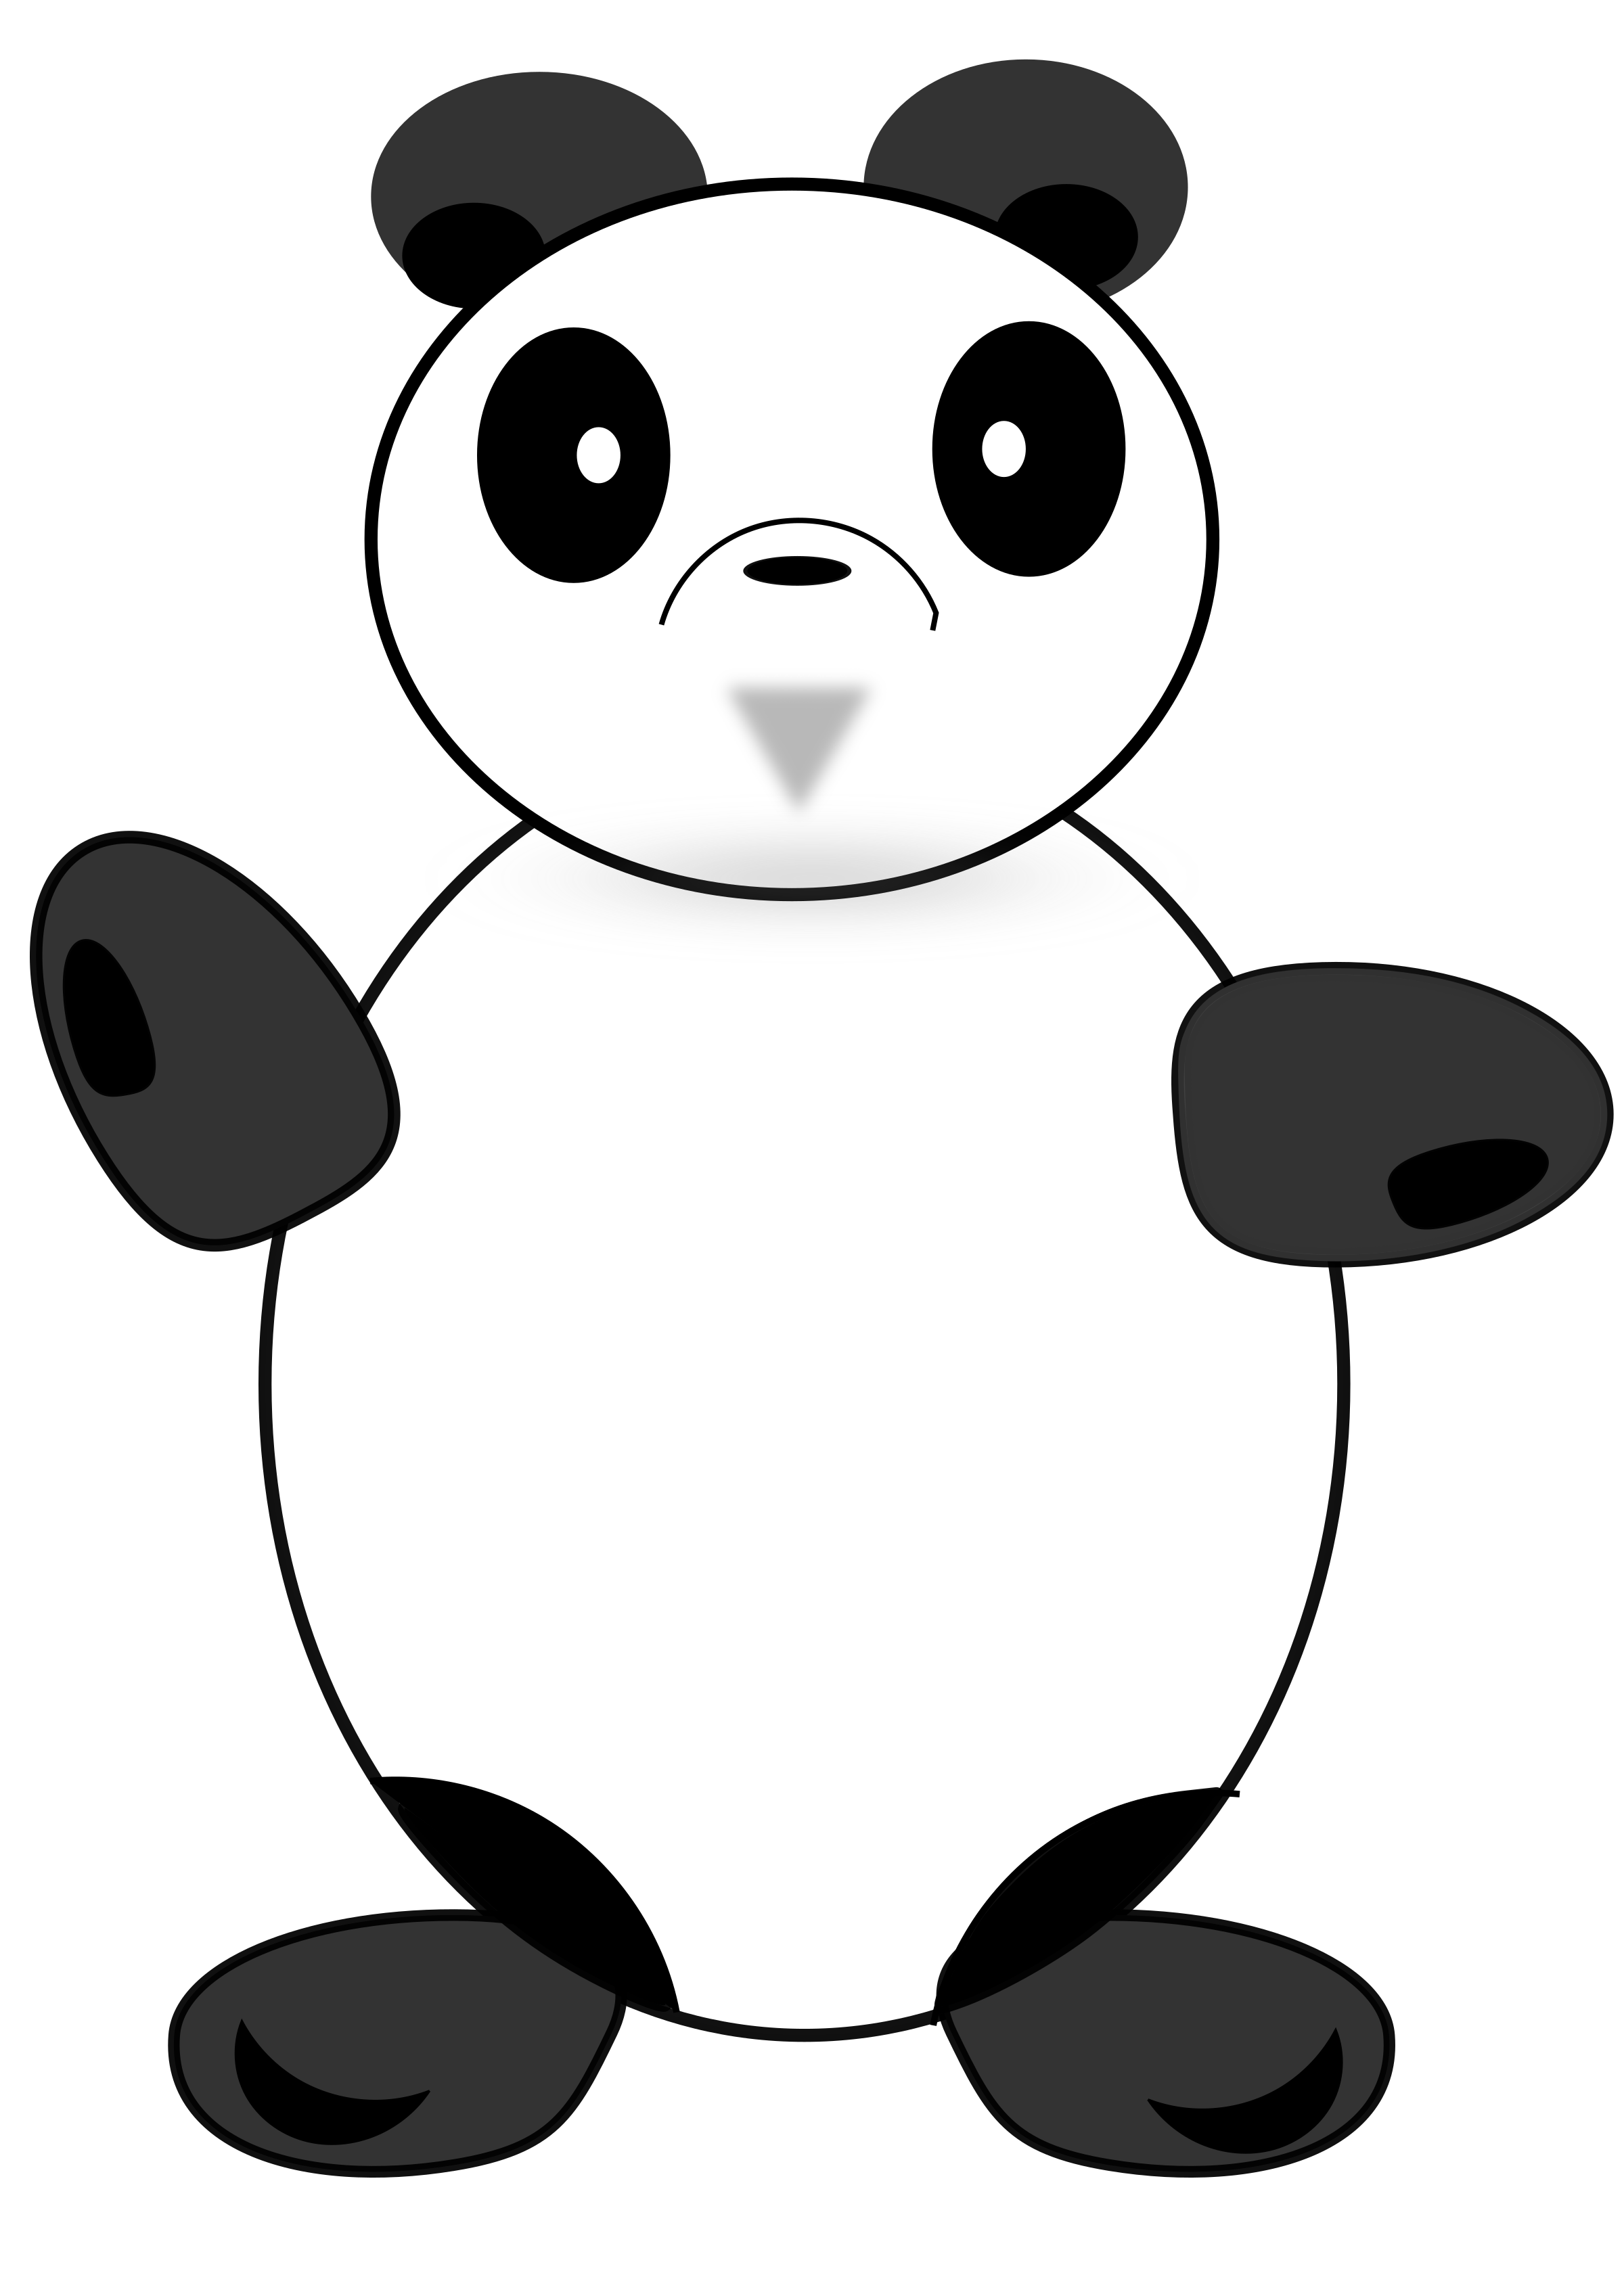 Панда без кругов. Панда рисунок. Рисование панды окружностями. Панда в круге. Панда рисунок карандашом.